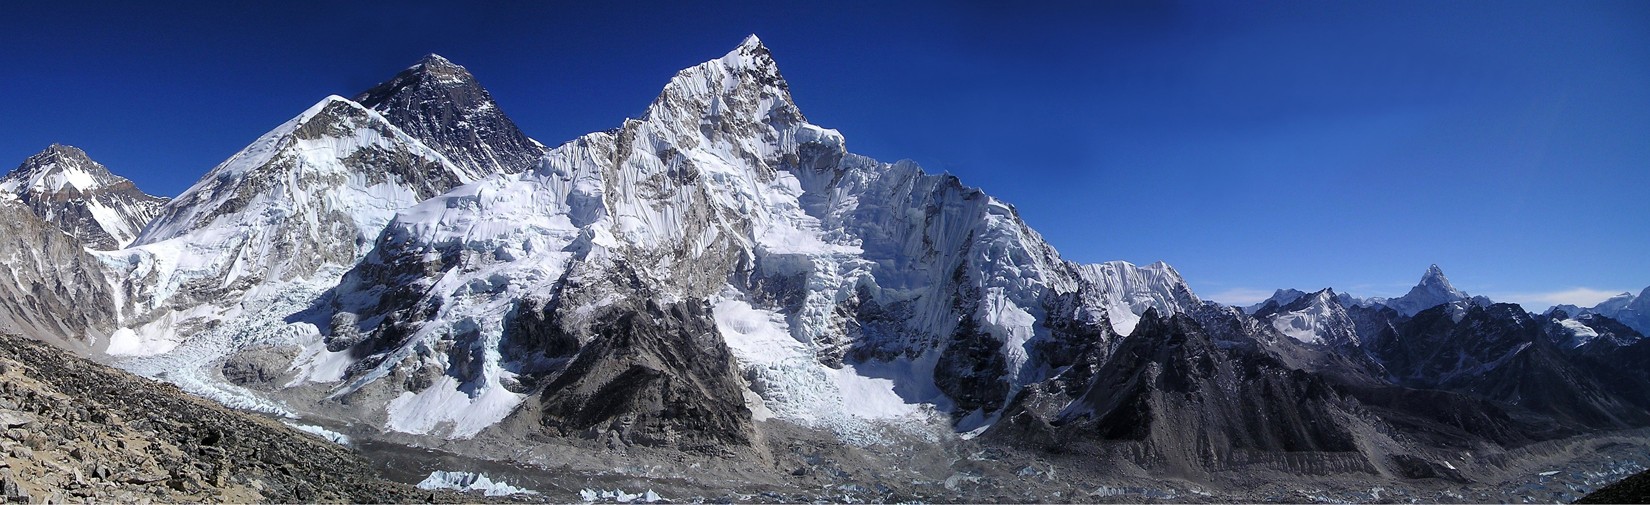 Scenic mountain landscape in the Everest region of Nepal